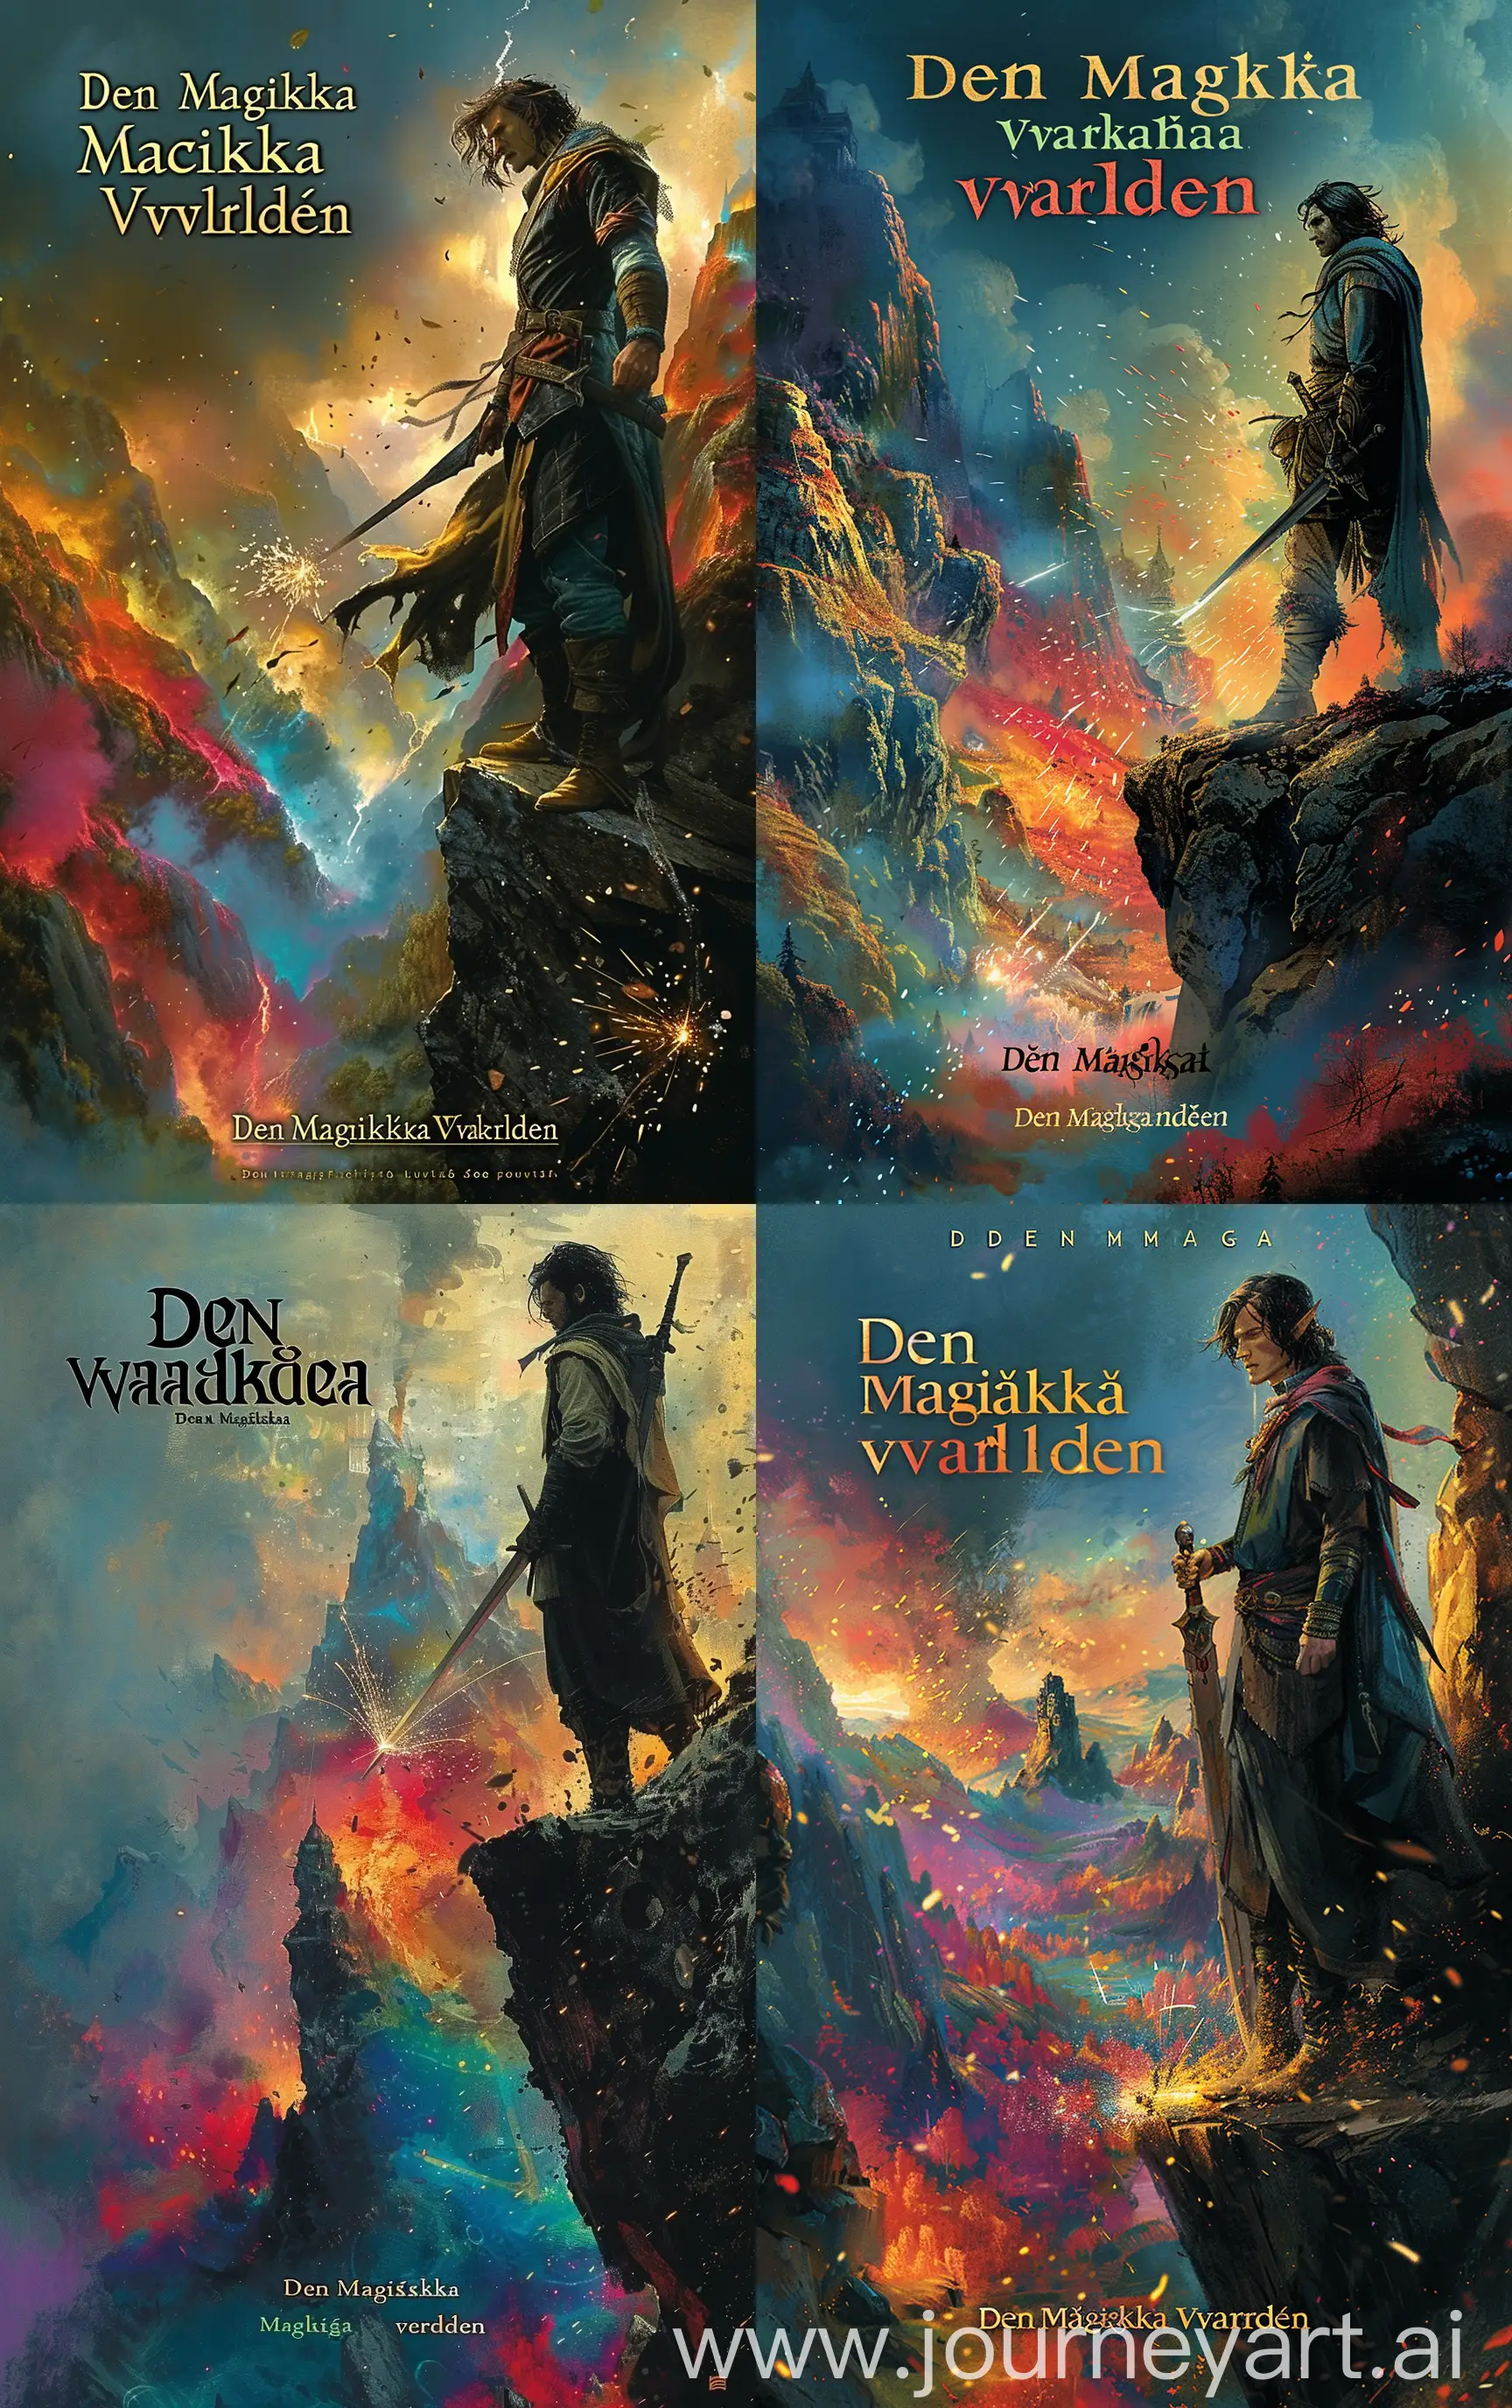 Mystical-Warrior-Overlooking-Colorful-Fantasy-World-Den-magiska-vrlden-Book-Cover